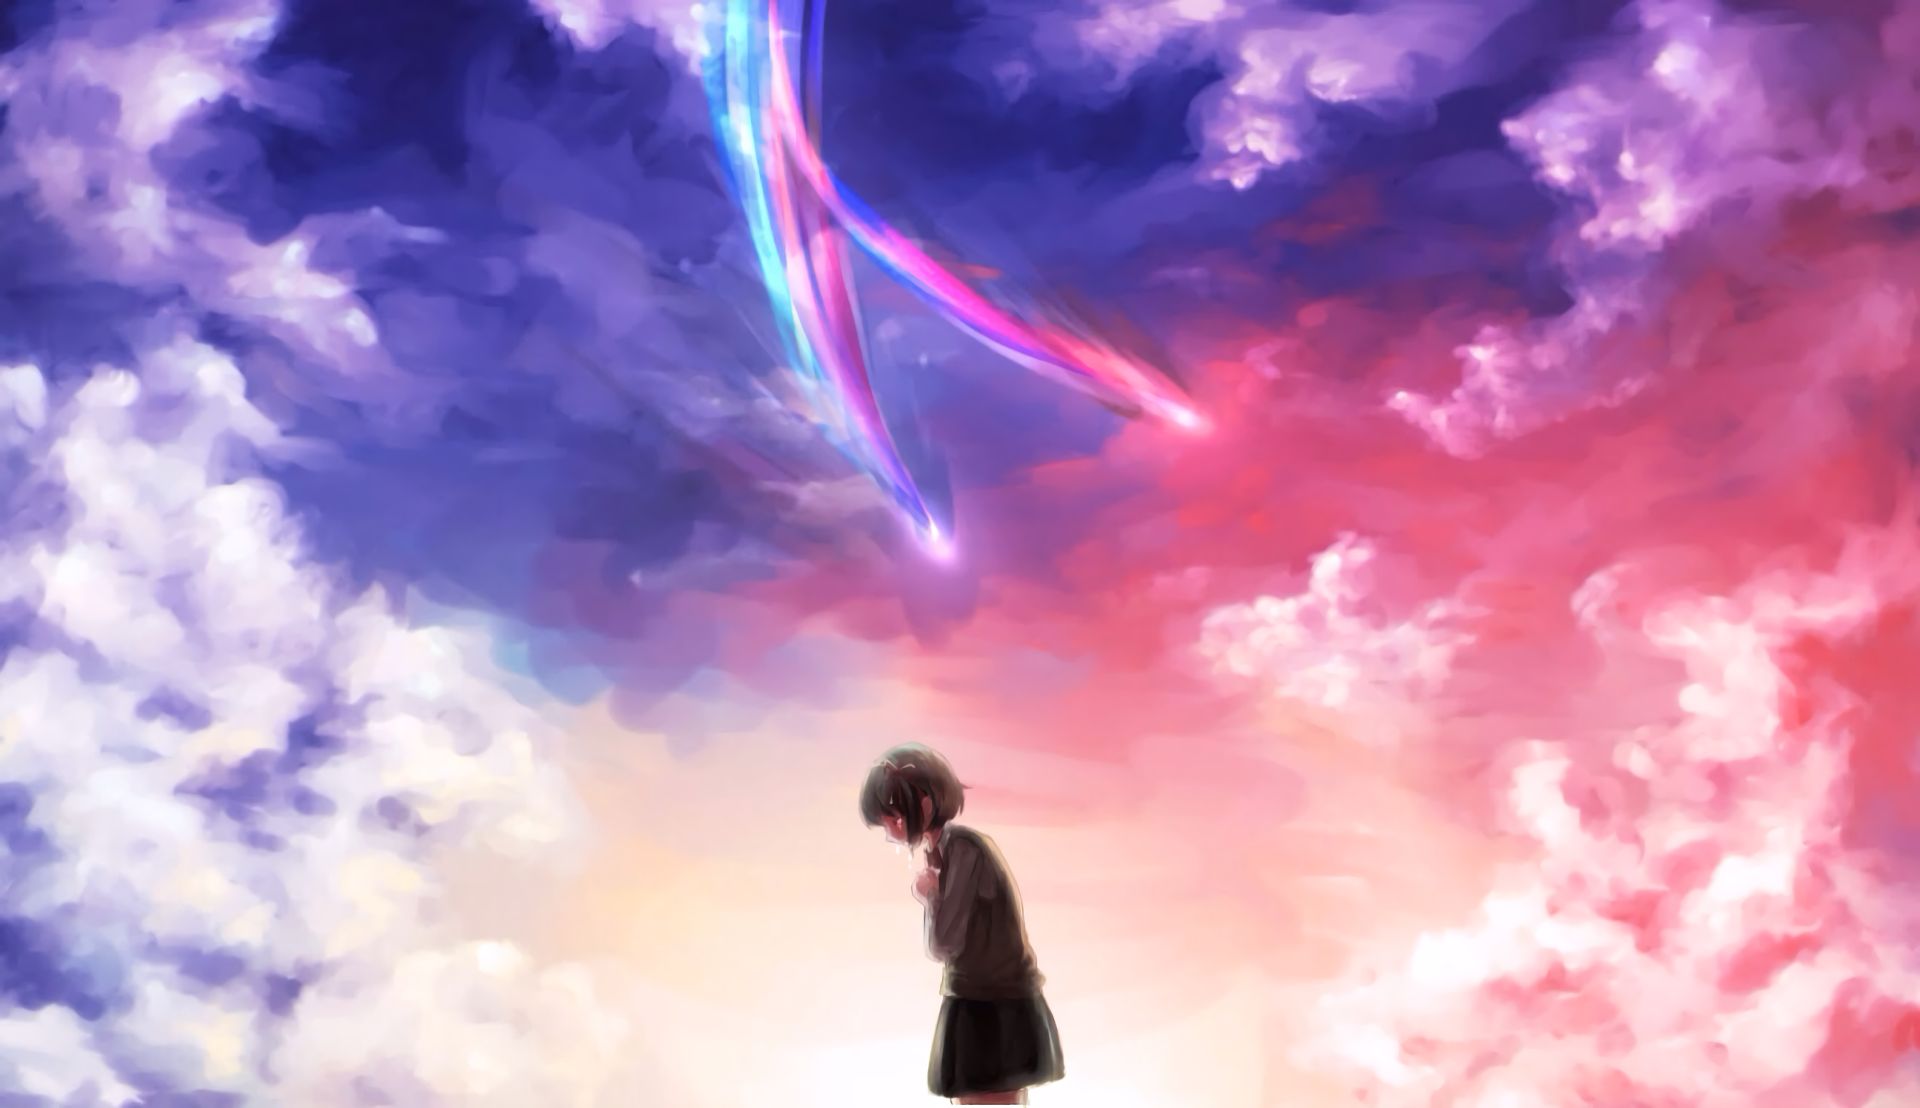 Baixar papel de parede para celular de Anime, Your Name, Kimi No Na Wa, Mitsuha Miyamizu gratuito.